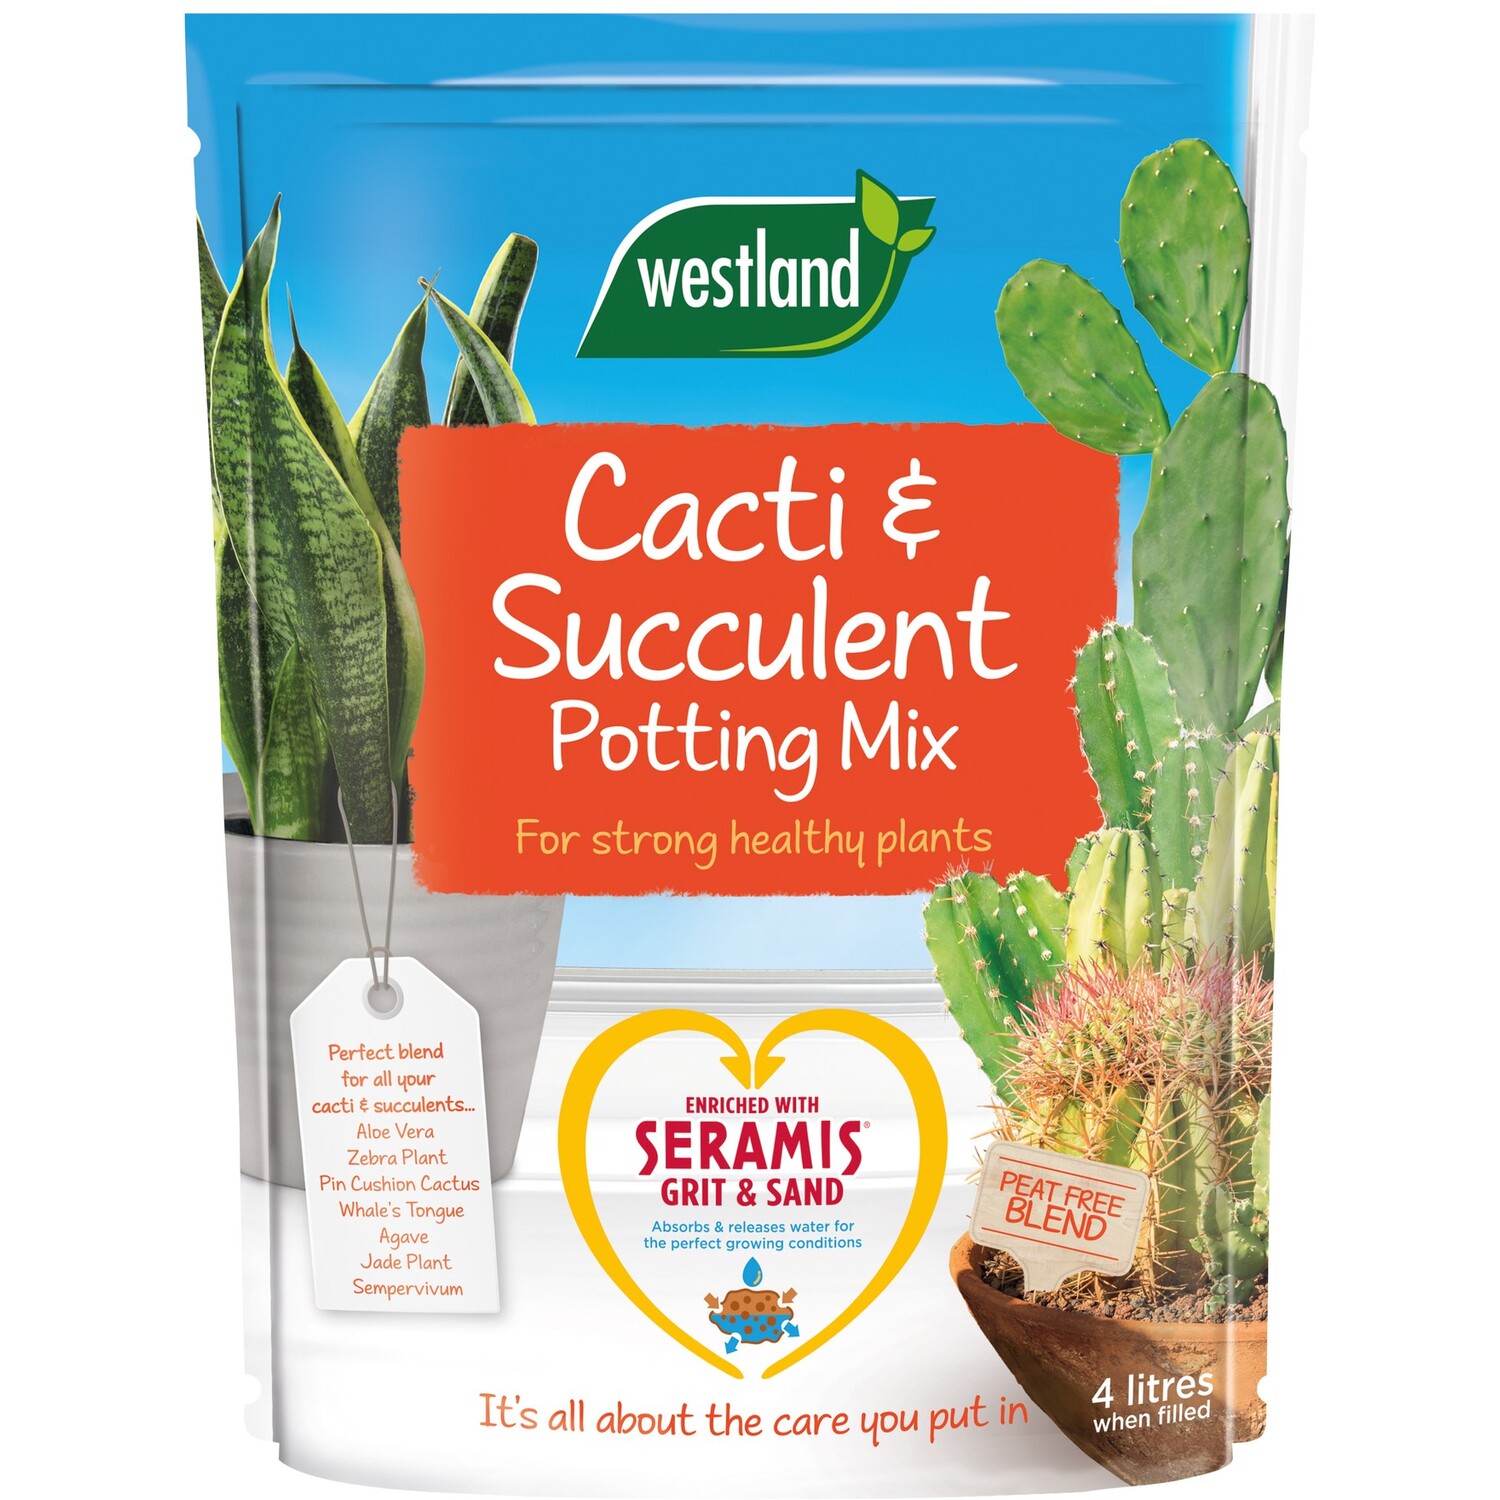 Westland Cacti and Succulent Potting Mix Image